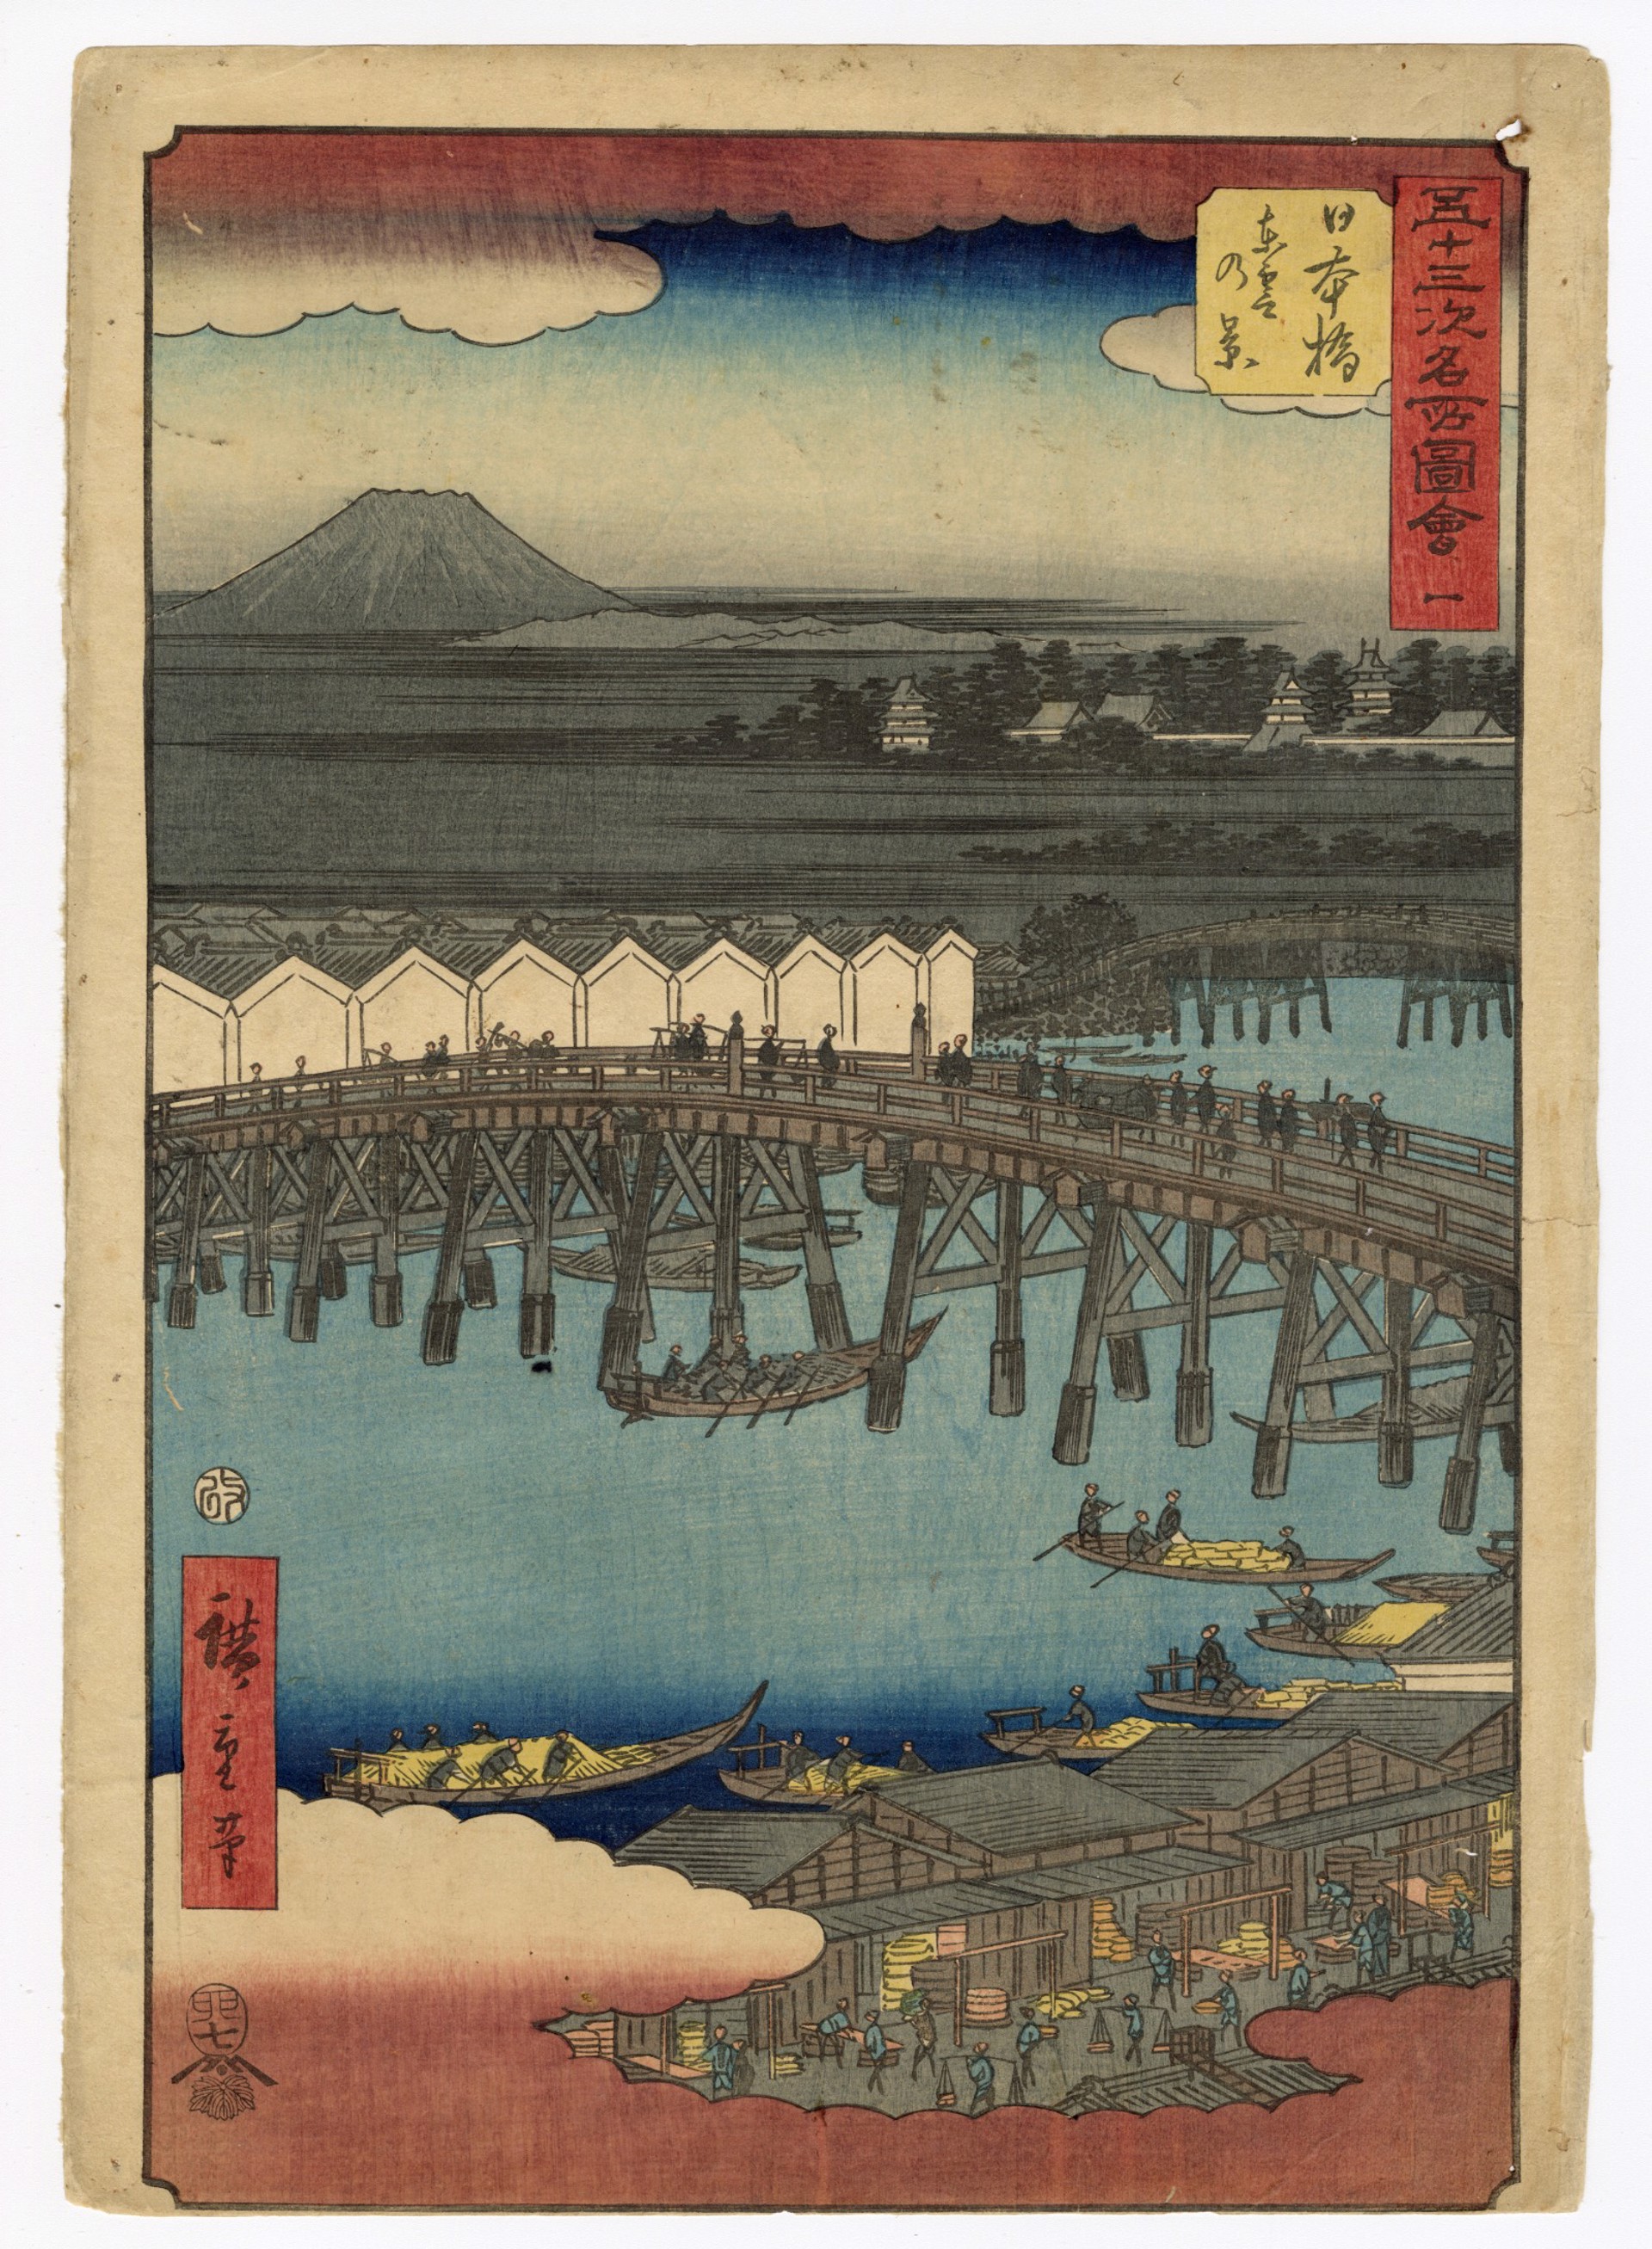 #1 Nihonbashi by Hiroshige